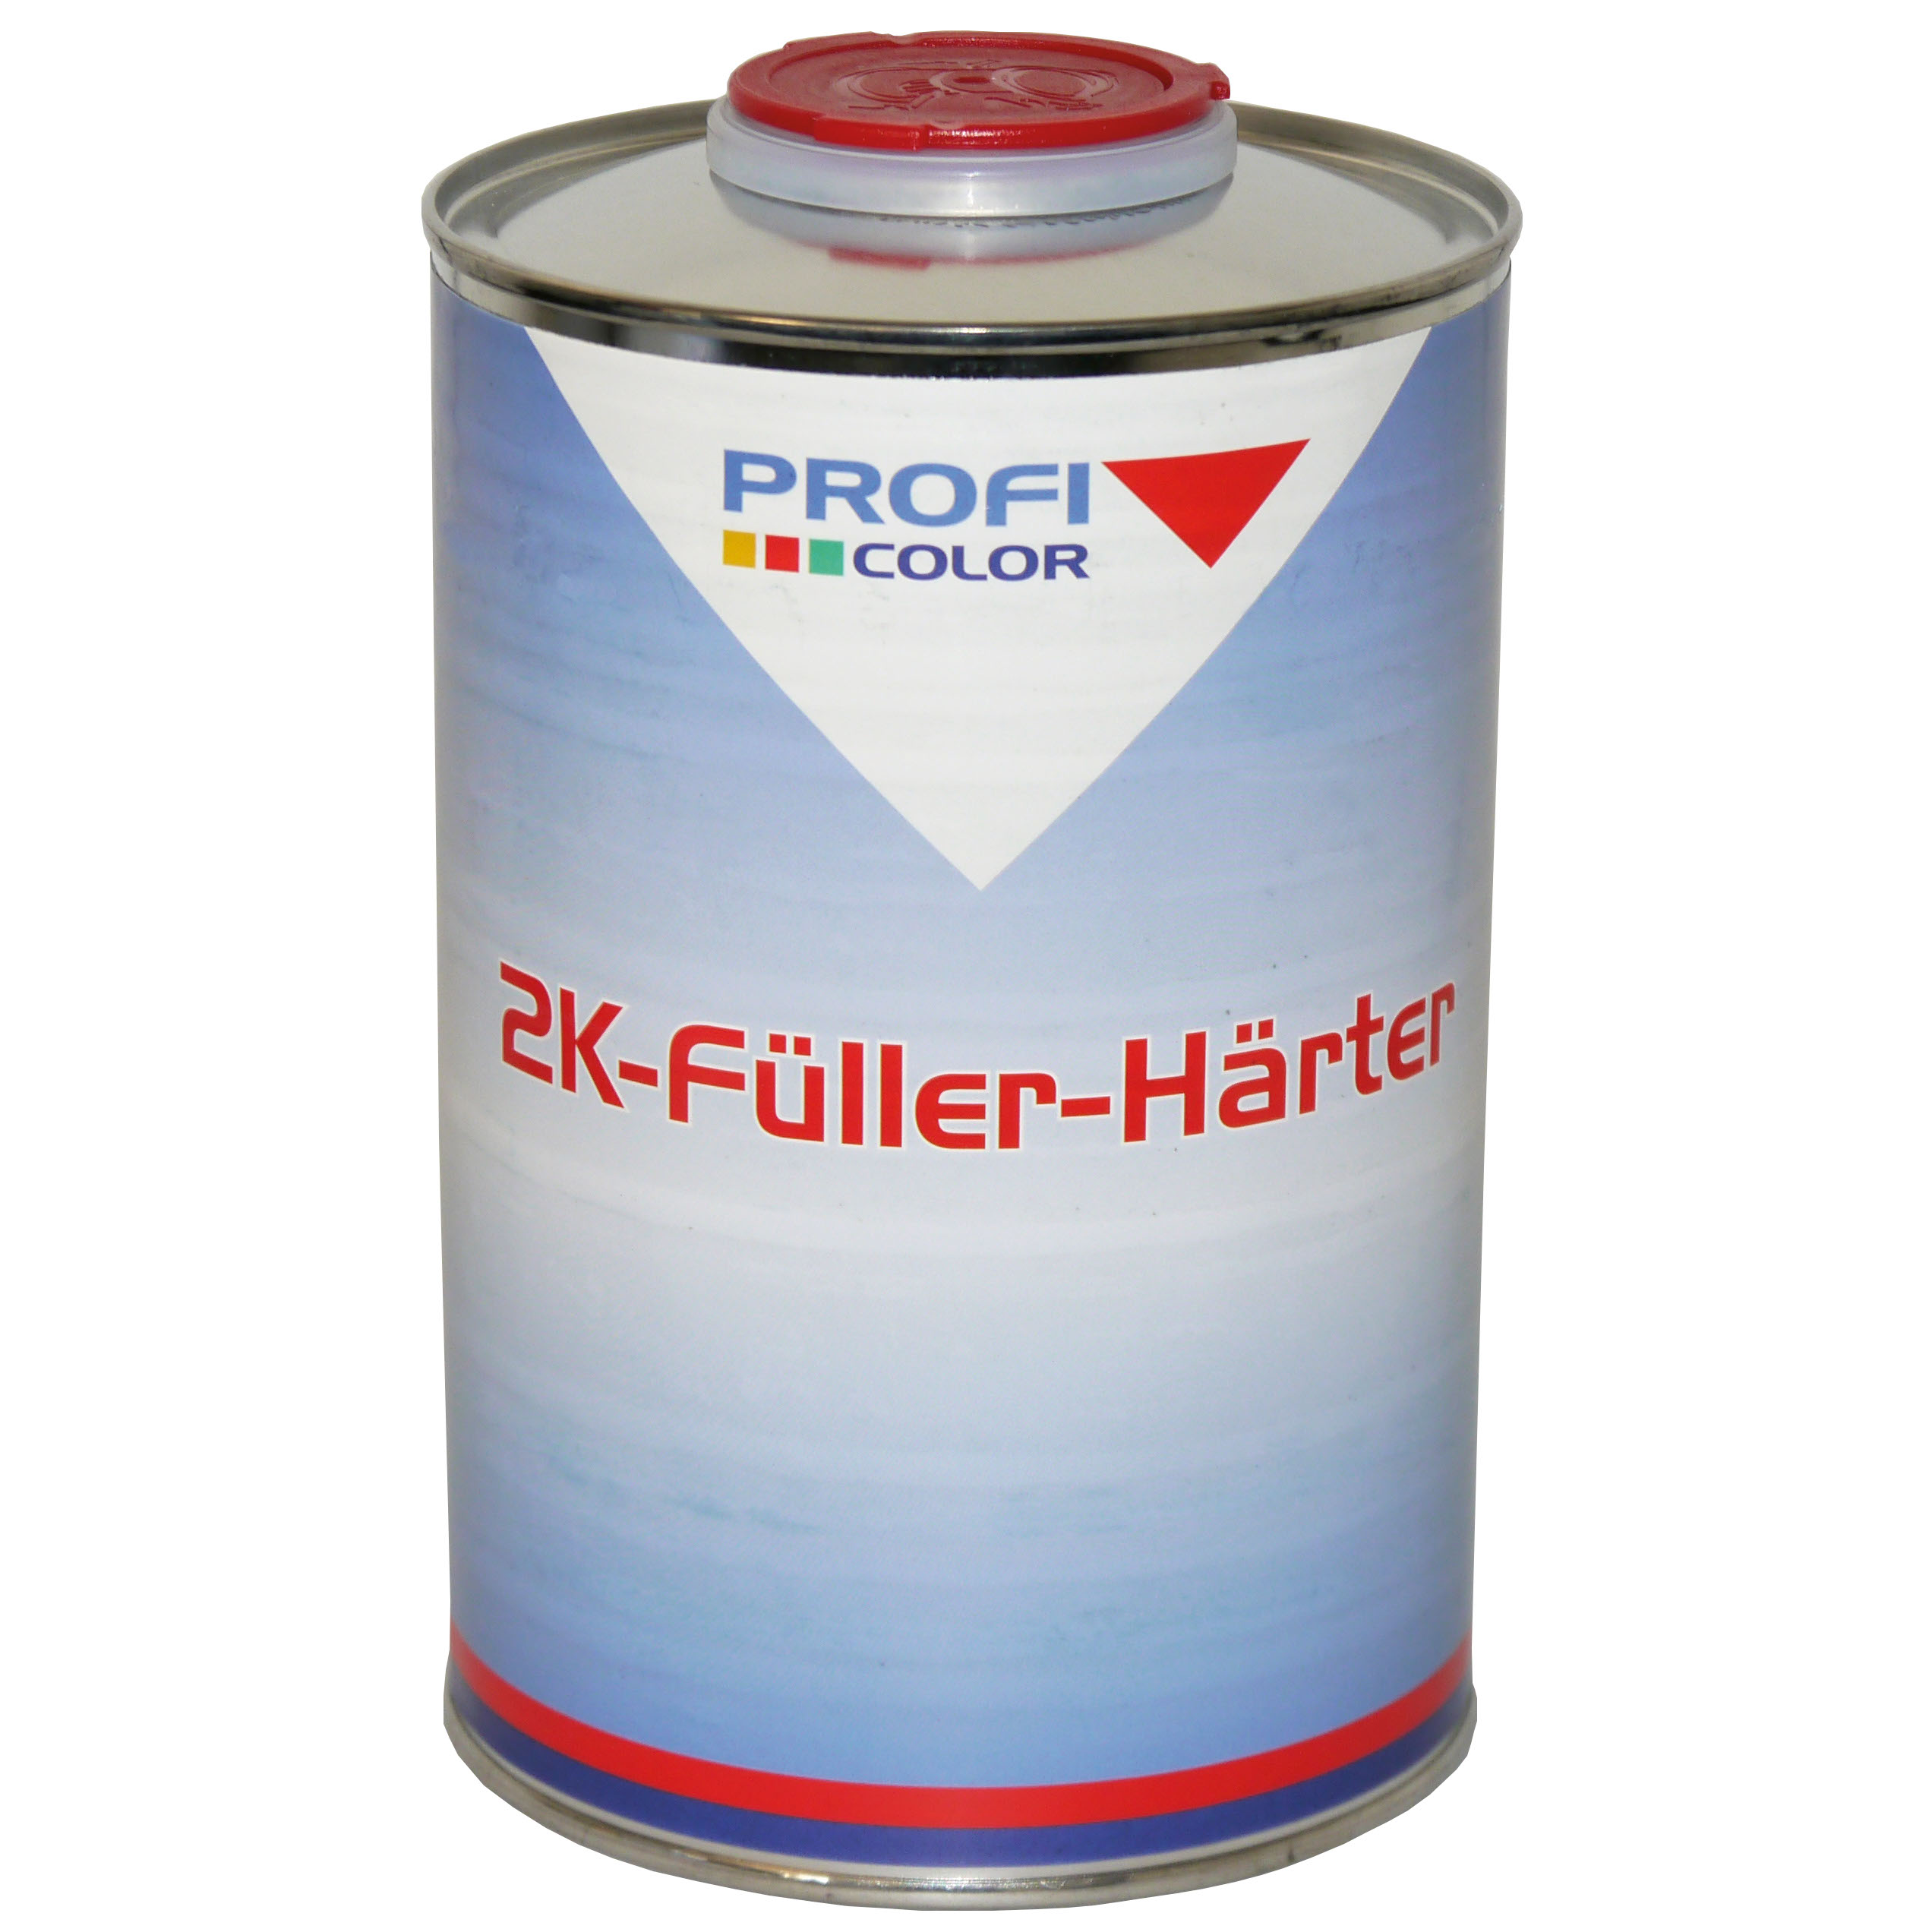 Profi Color 2K-Füller-Härter, 1 l